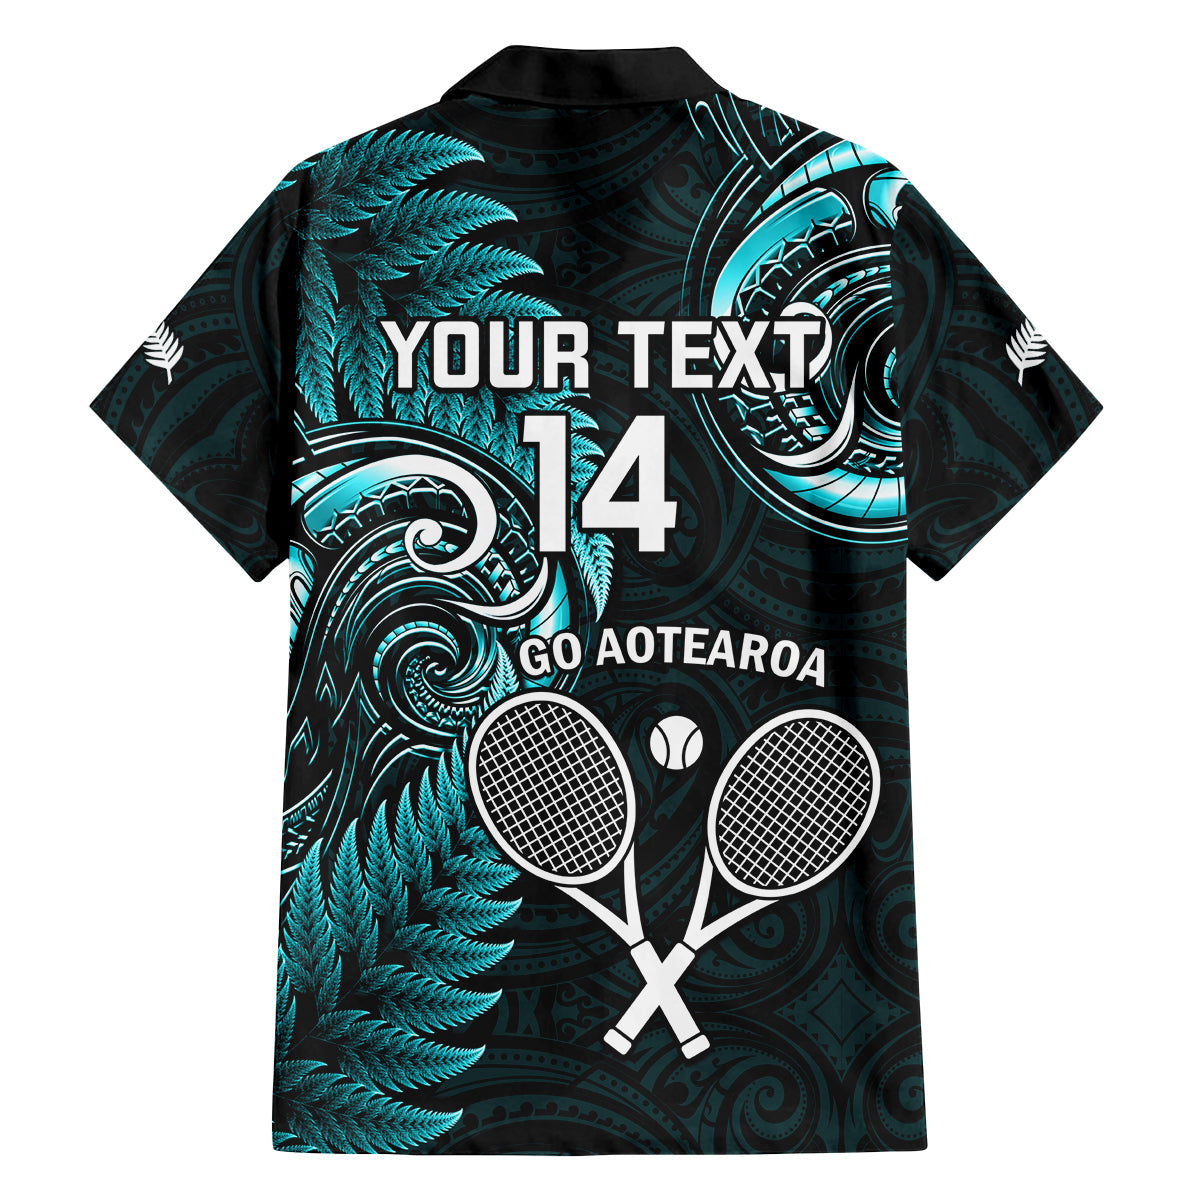 Custom New Zealand Tiki Tennis Family Matching Long Sleeve Bodycon Dress and Hawaiian Shirt 2024 Aotearoa Tenehi Maori Silver Fern - Turquoise